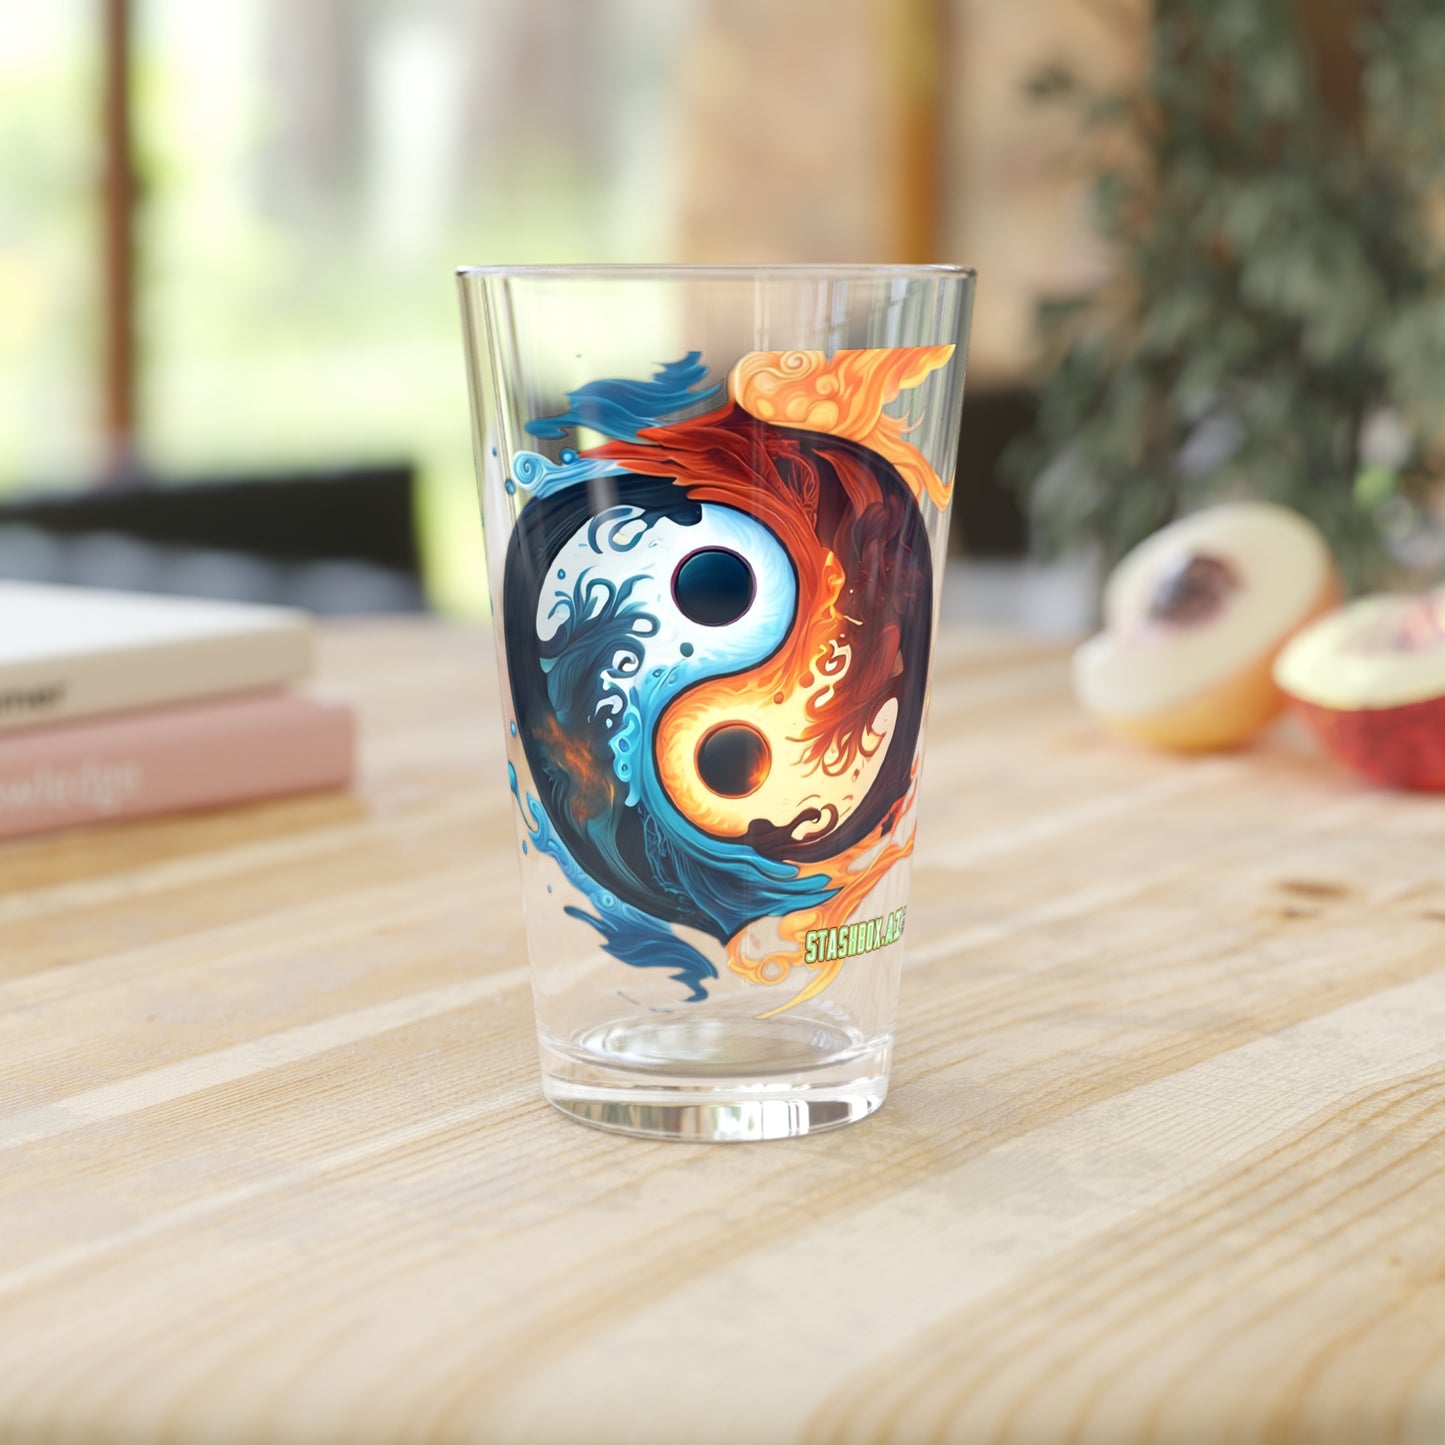 Ying Yang Pint Glass, 16oz Colorful by Joel Lovett #001